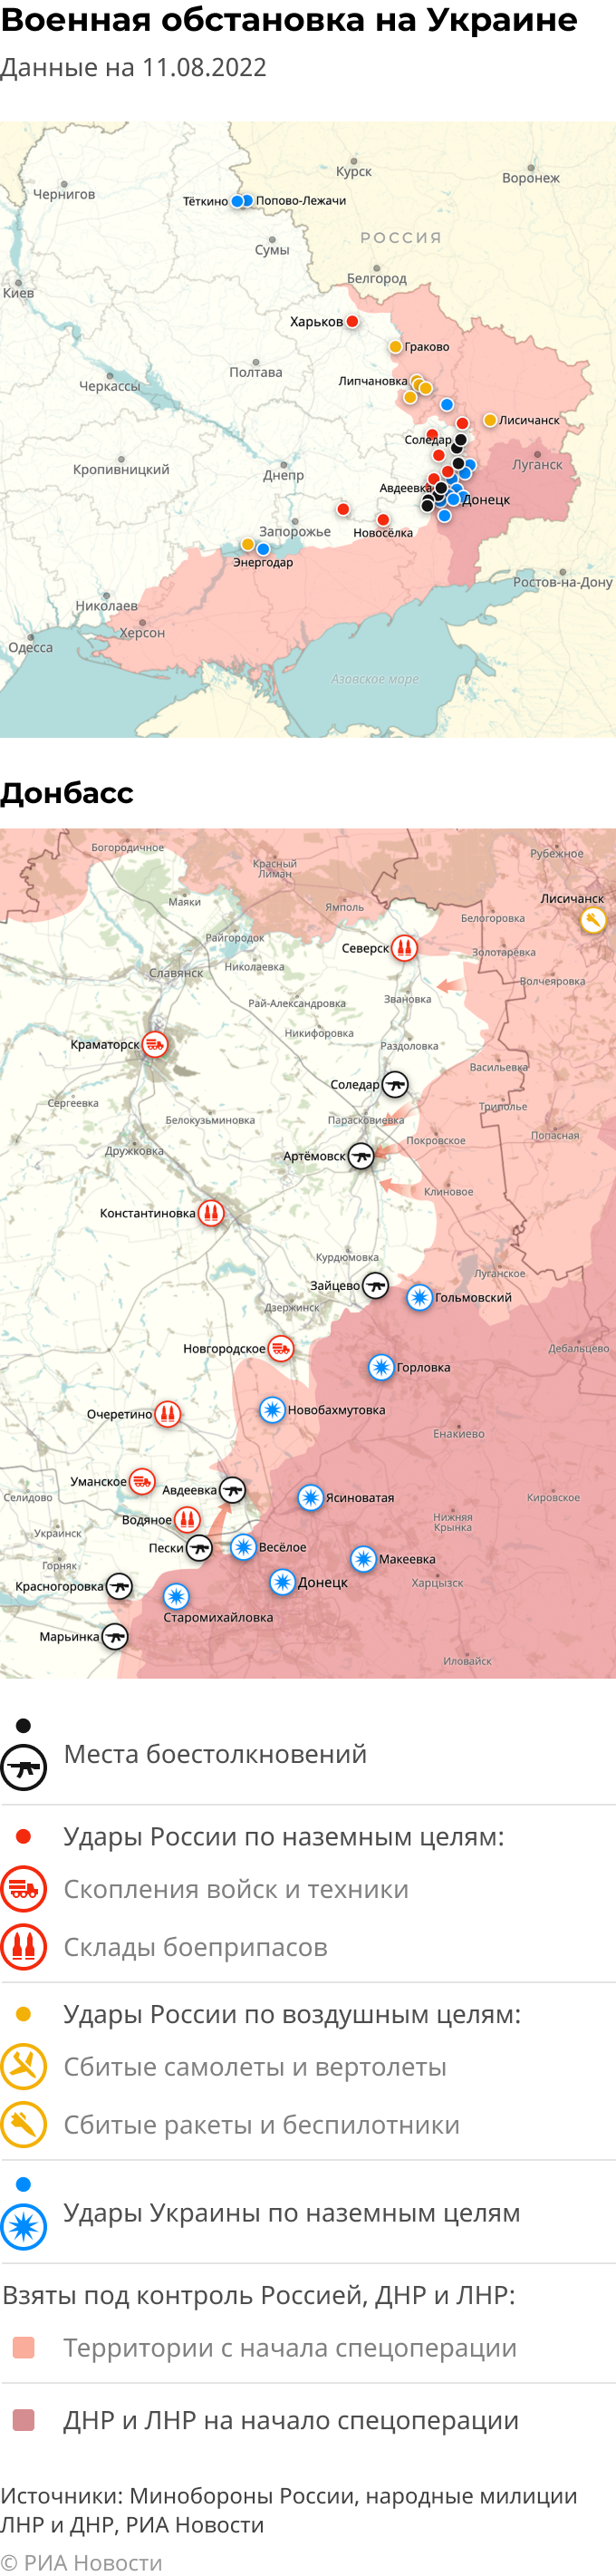 Карта с боевыми действиями на украине онлайн